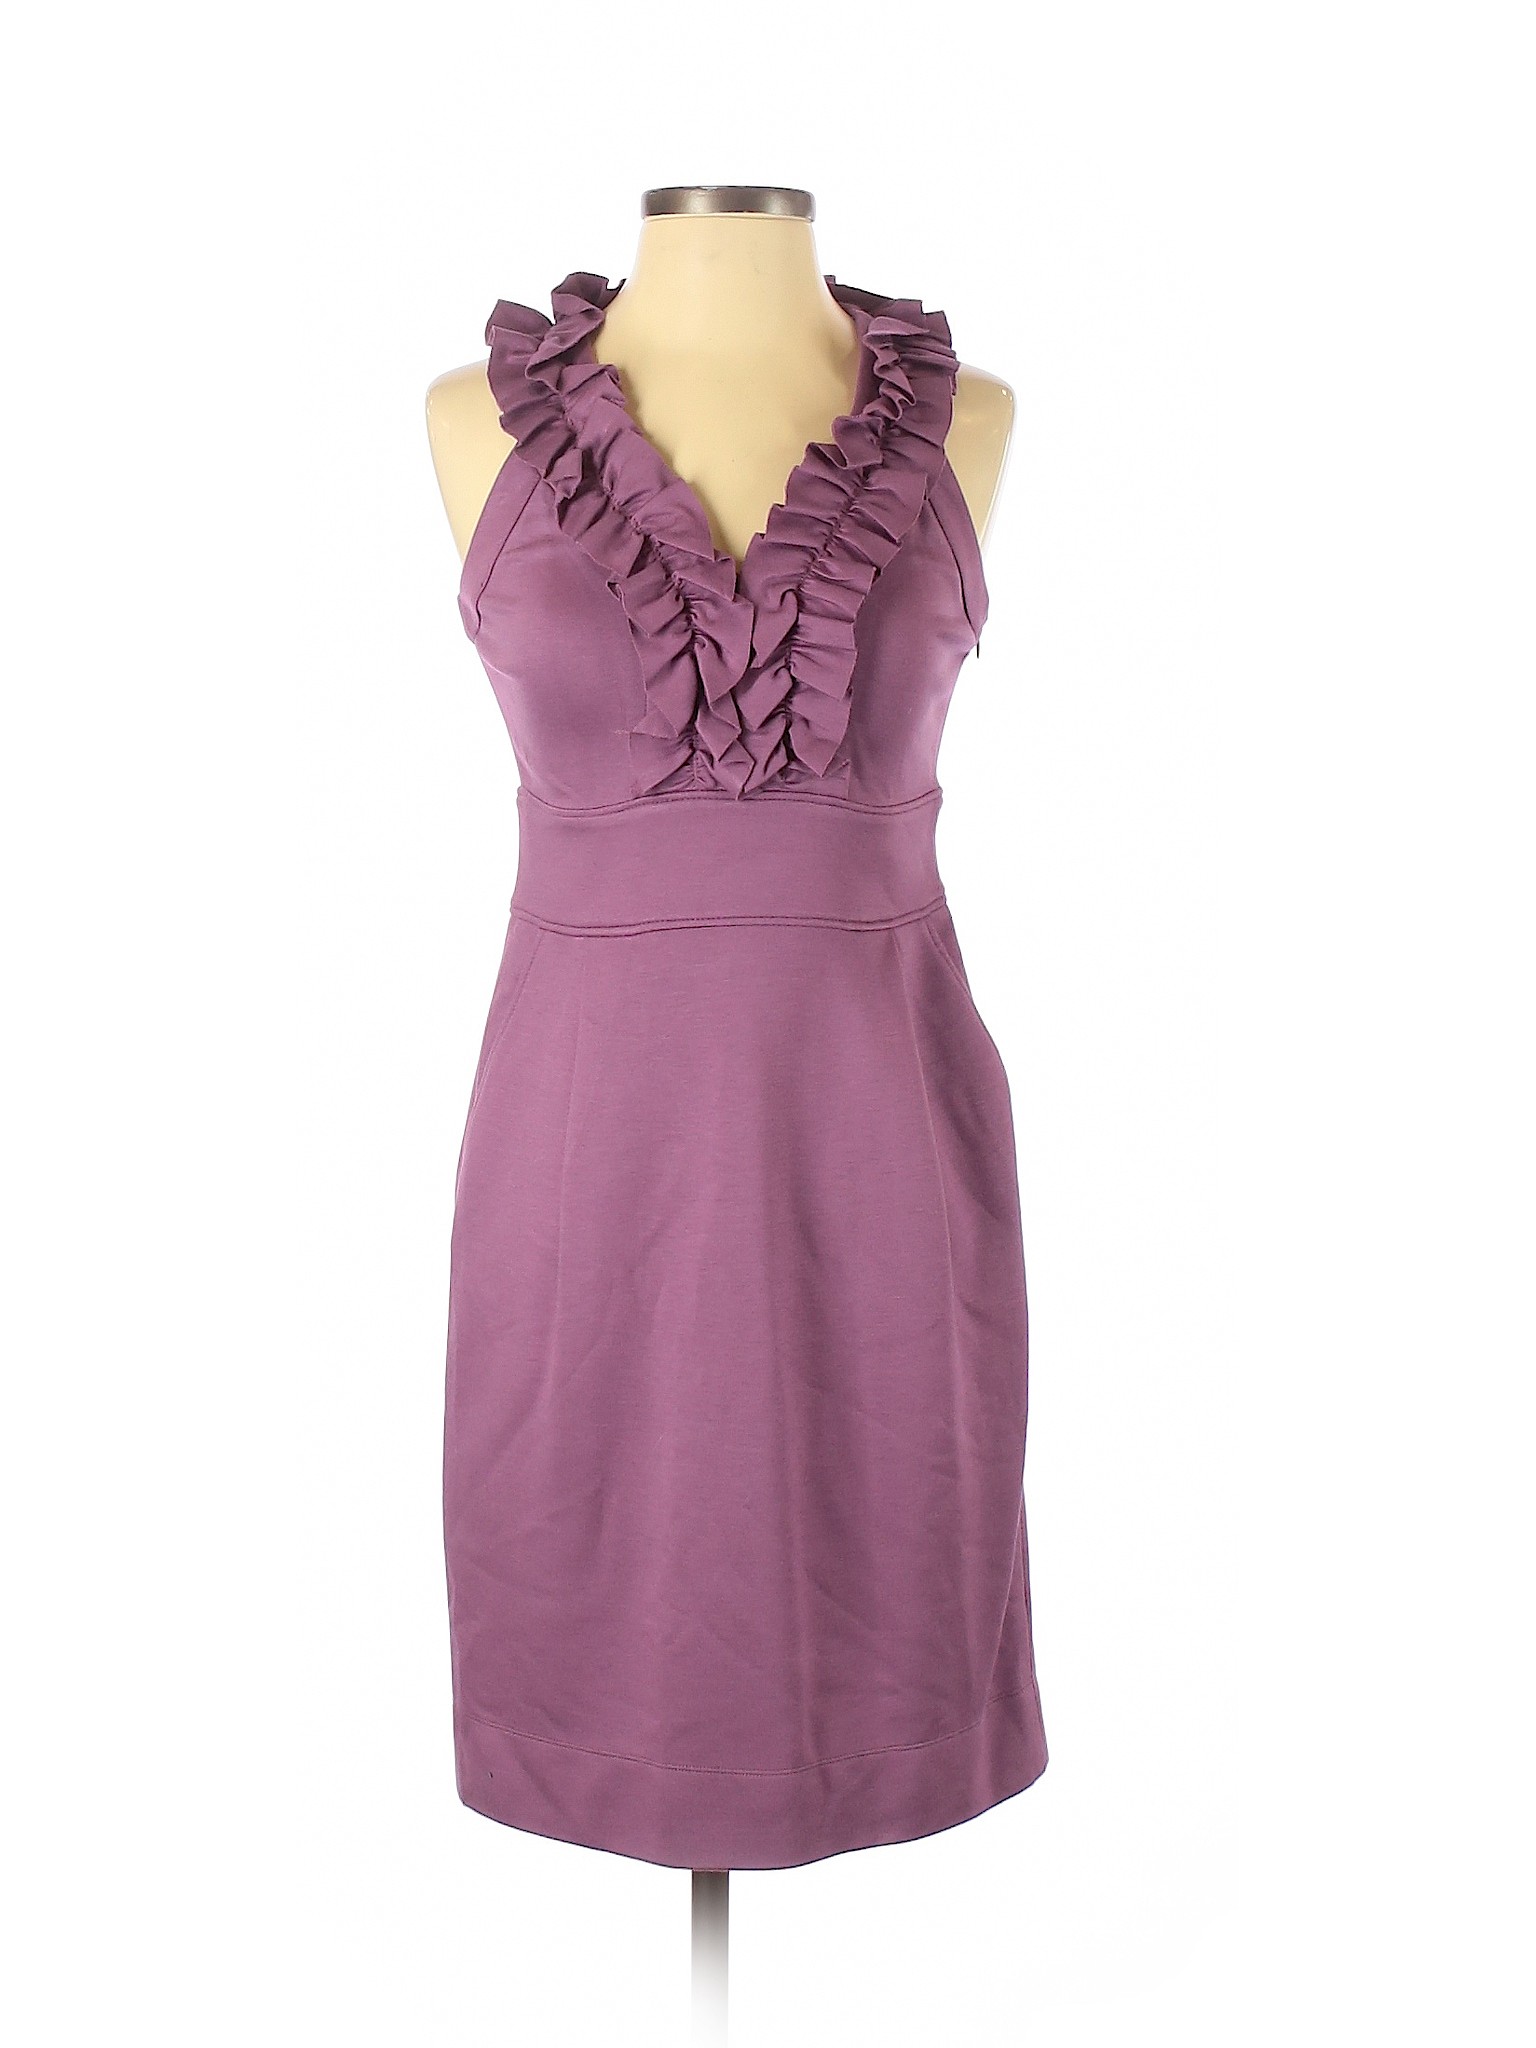 NWT Banana Republic Women Purple Casual Dress 2 Petites | eBay